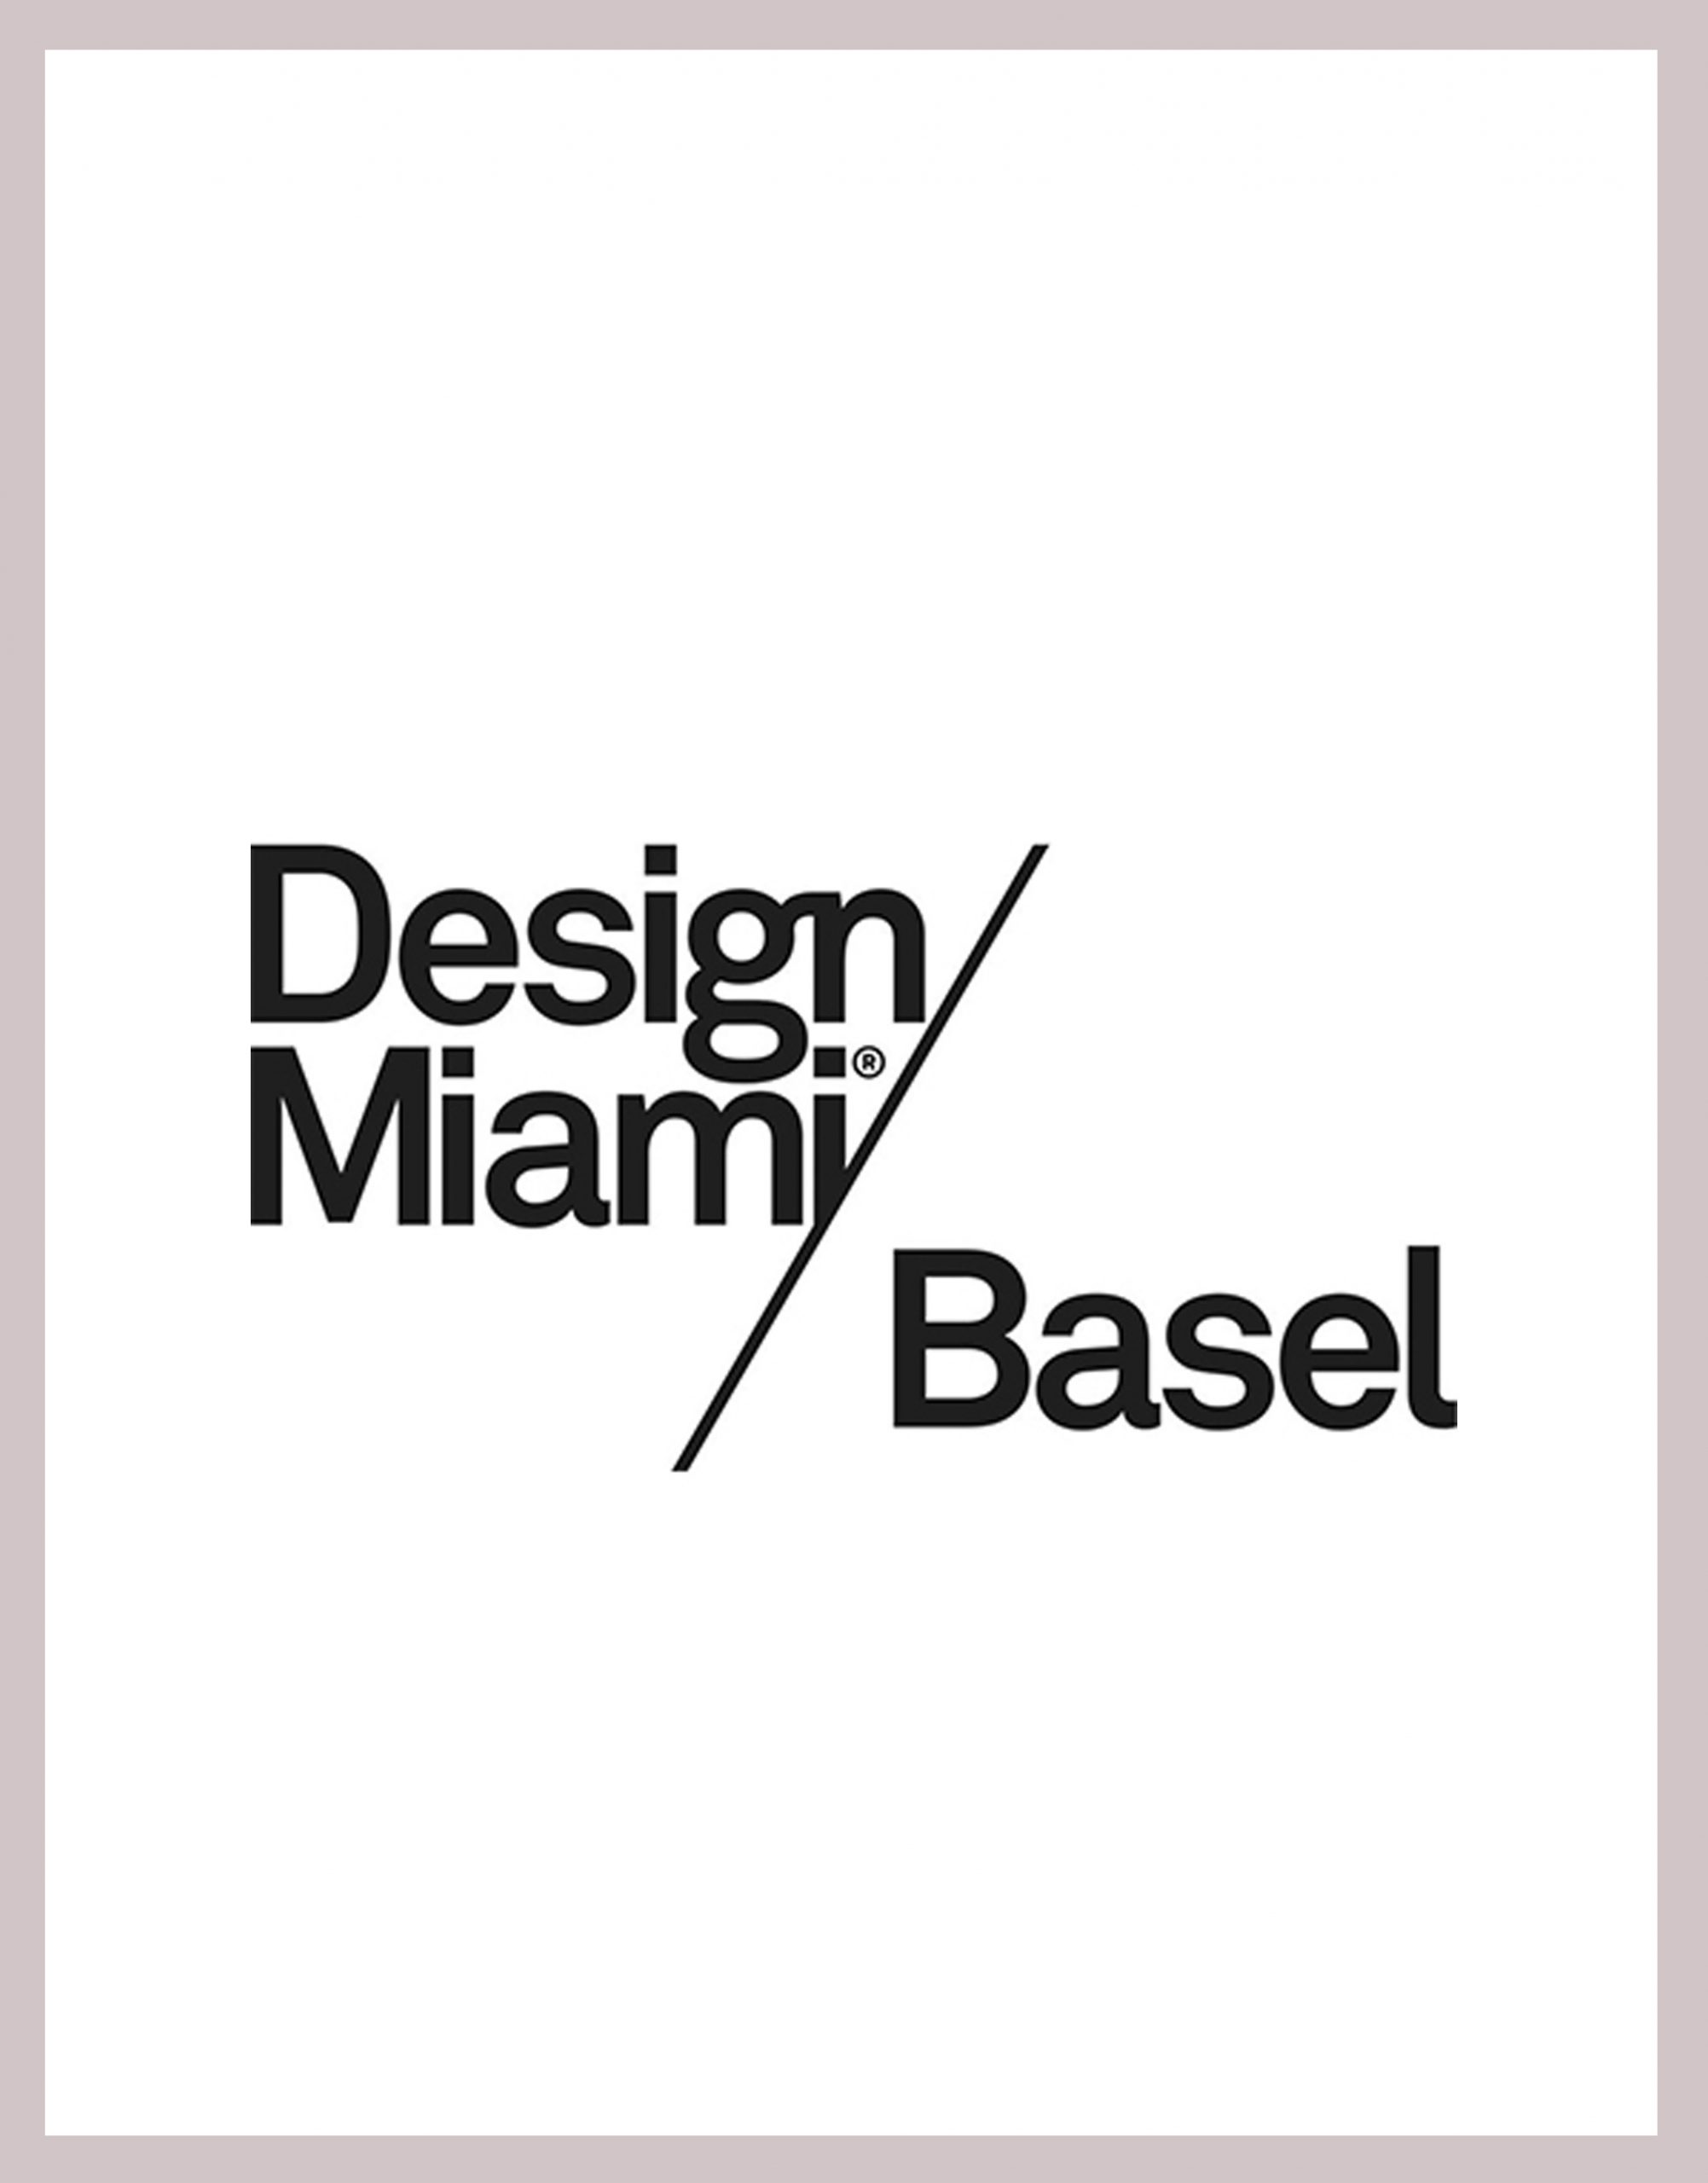 Hella Jongerius - Design Miami / Basel 2016